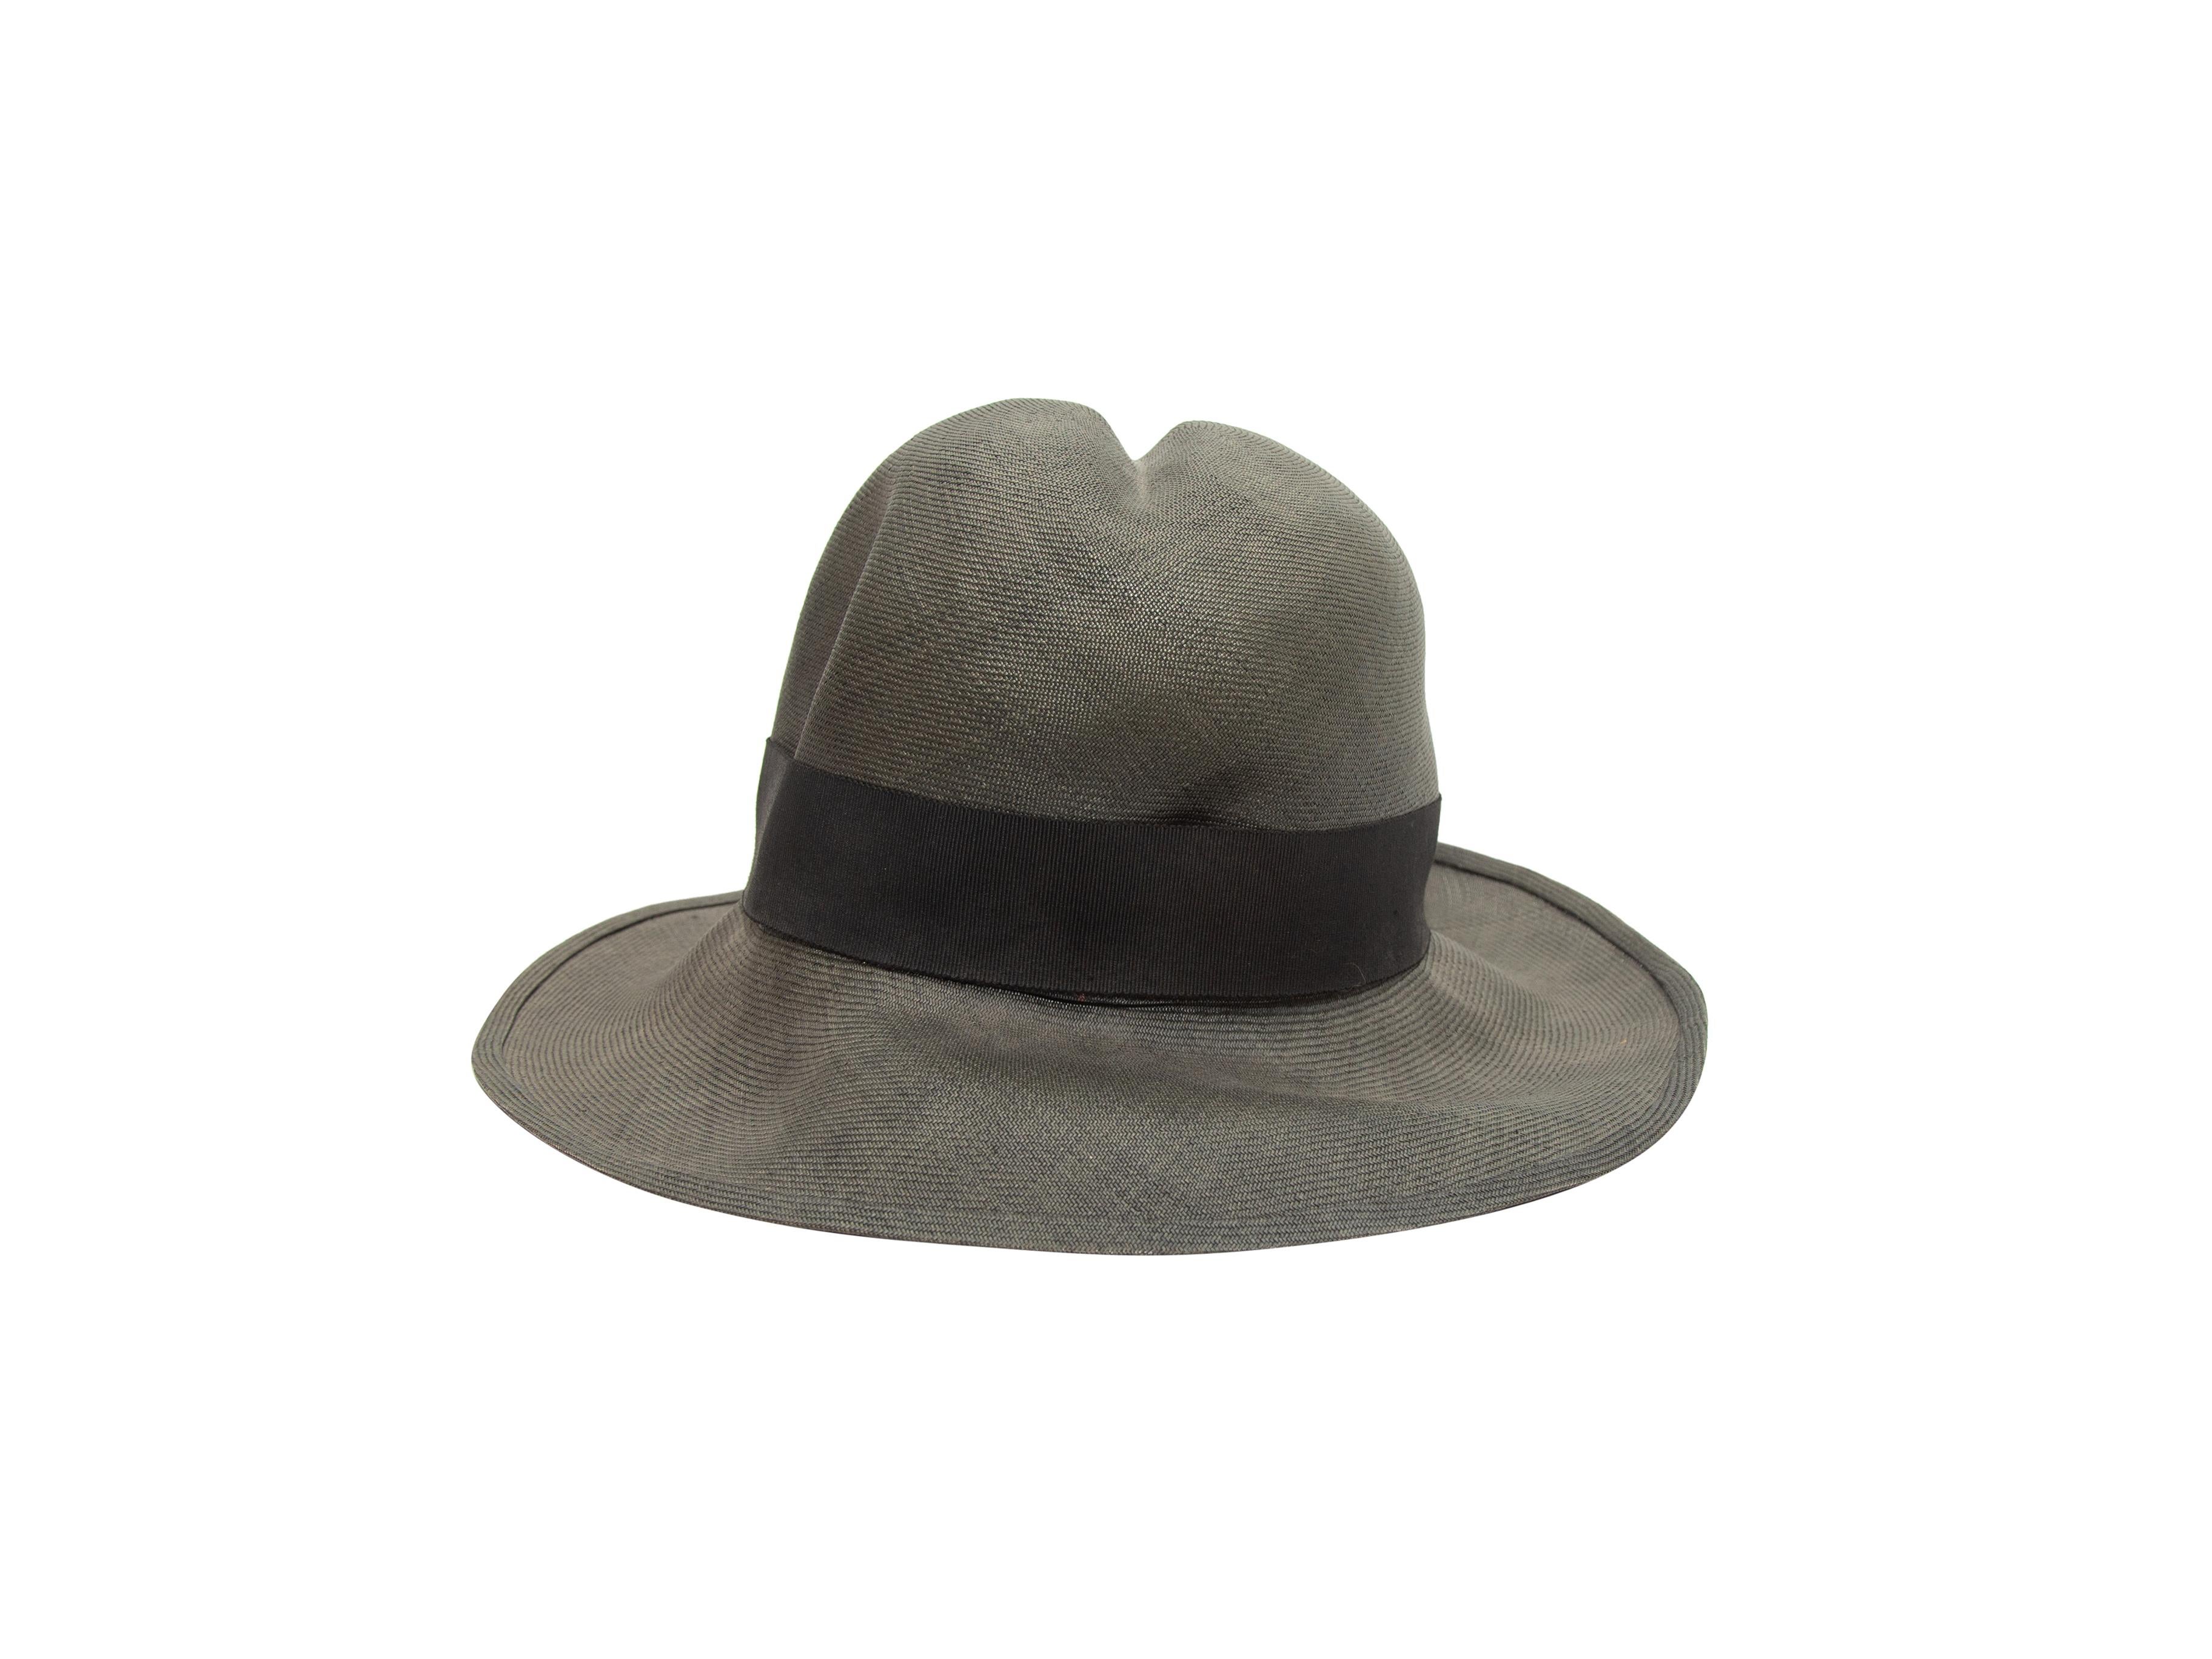 Product details: Vintage grey straw wide brim hat by Chanel. Black grosgrain ribbon trim. 6